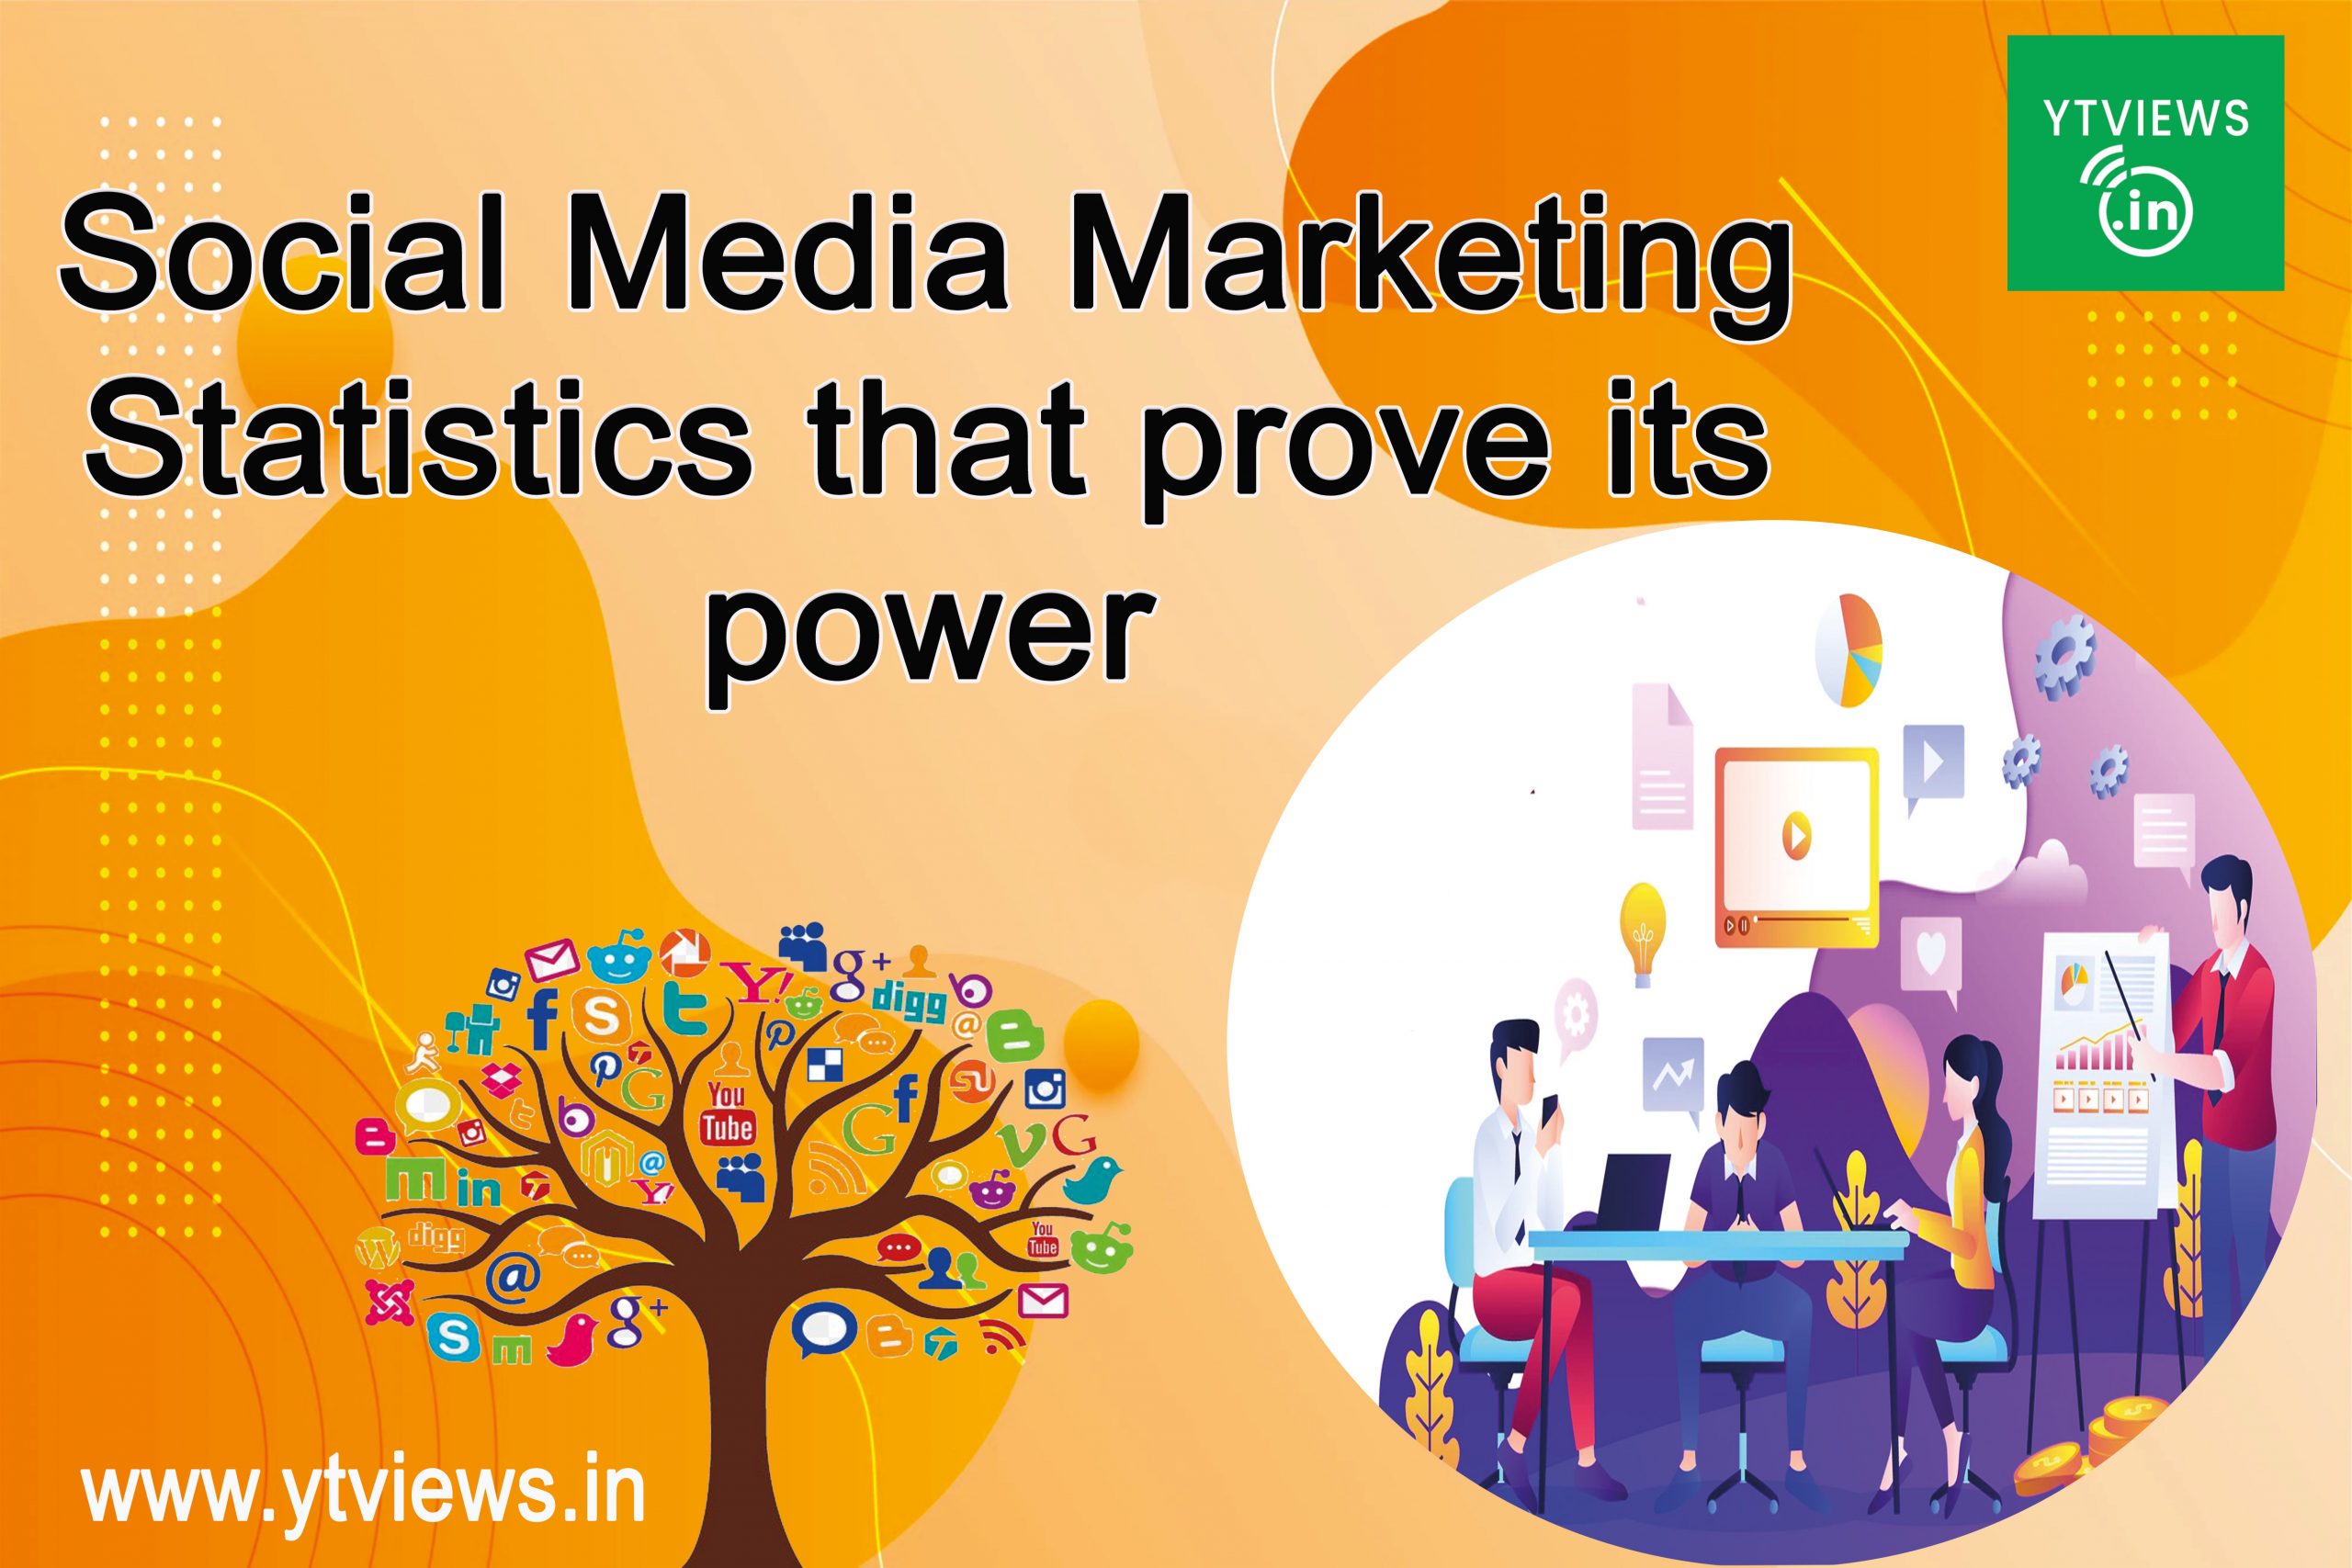 Social Media Marketing Statistics that Prove its Power